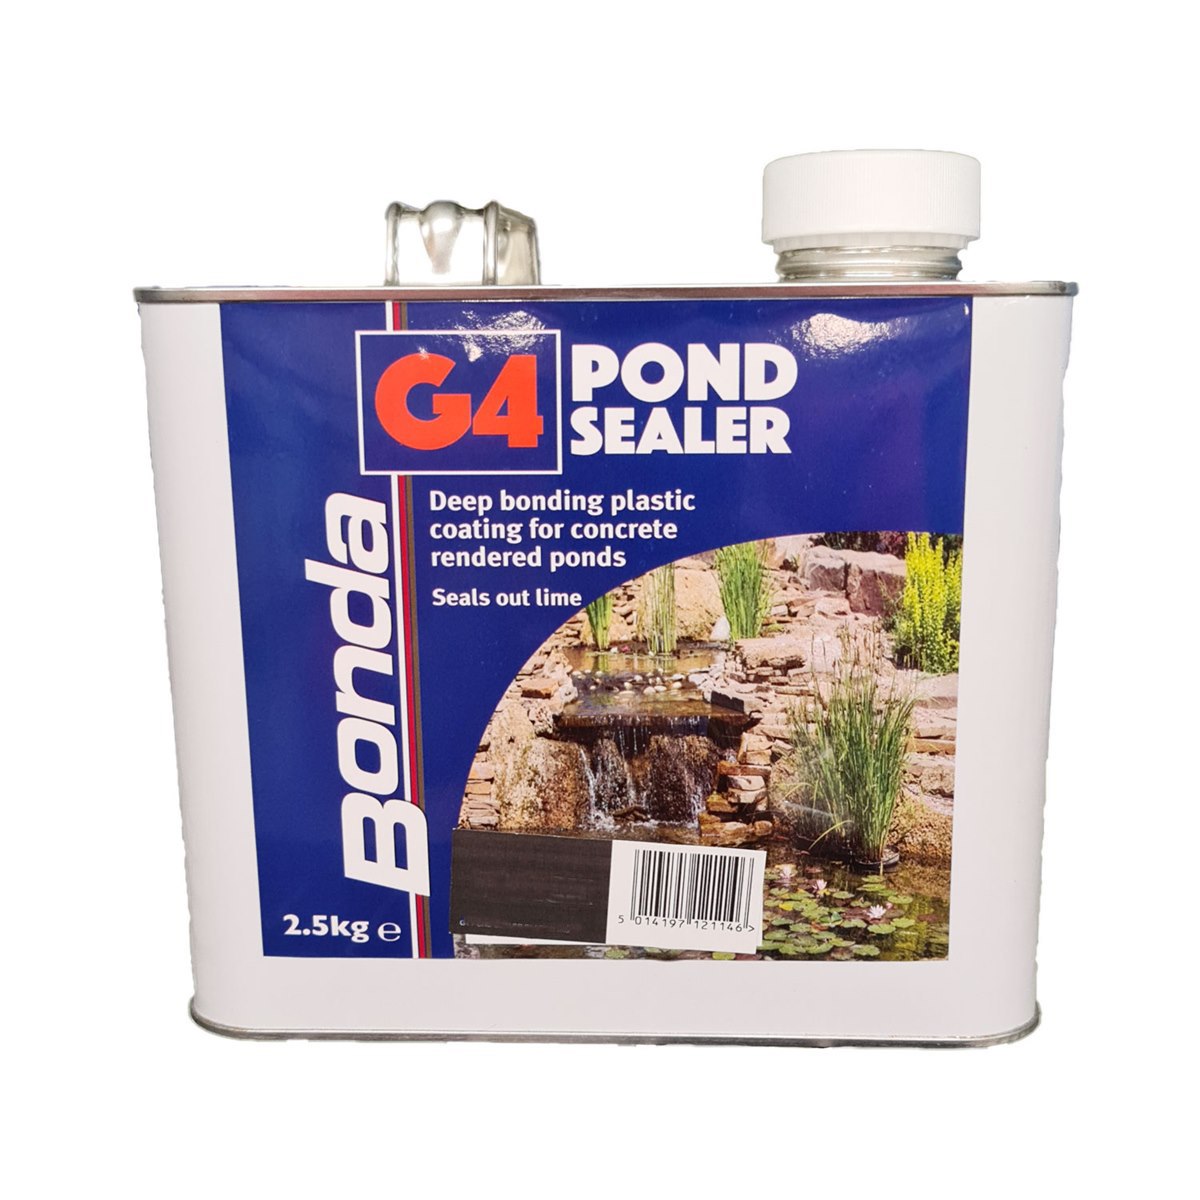 Bonda G4 Pond Sealer Clear 2.5kg 